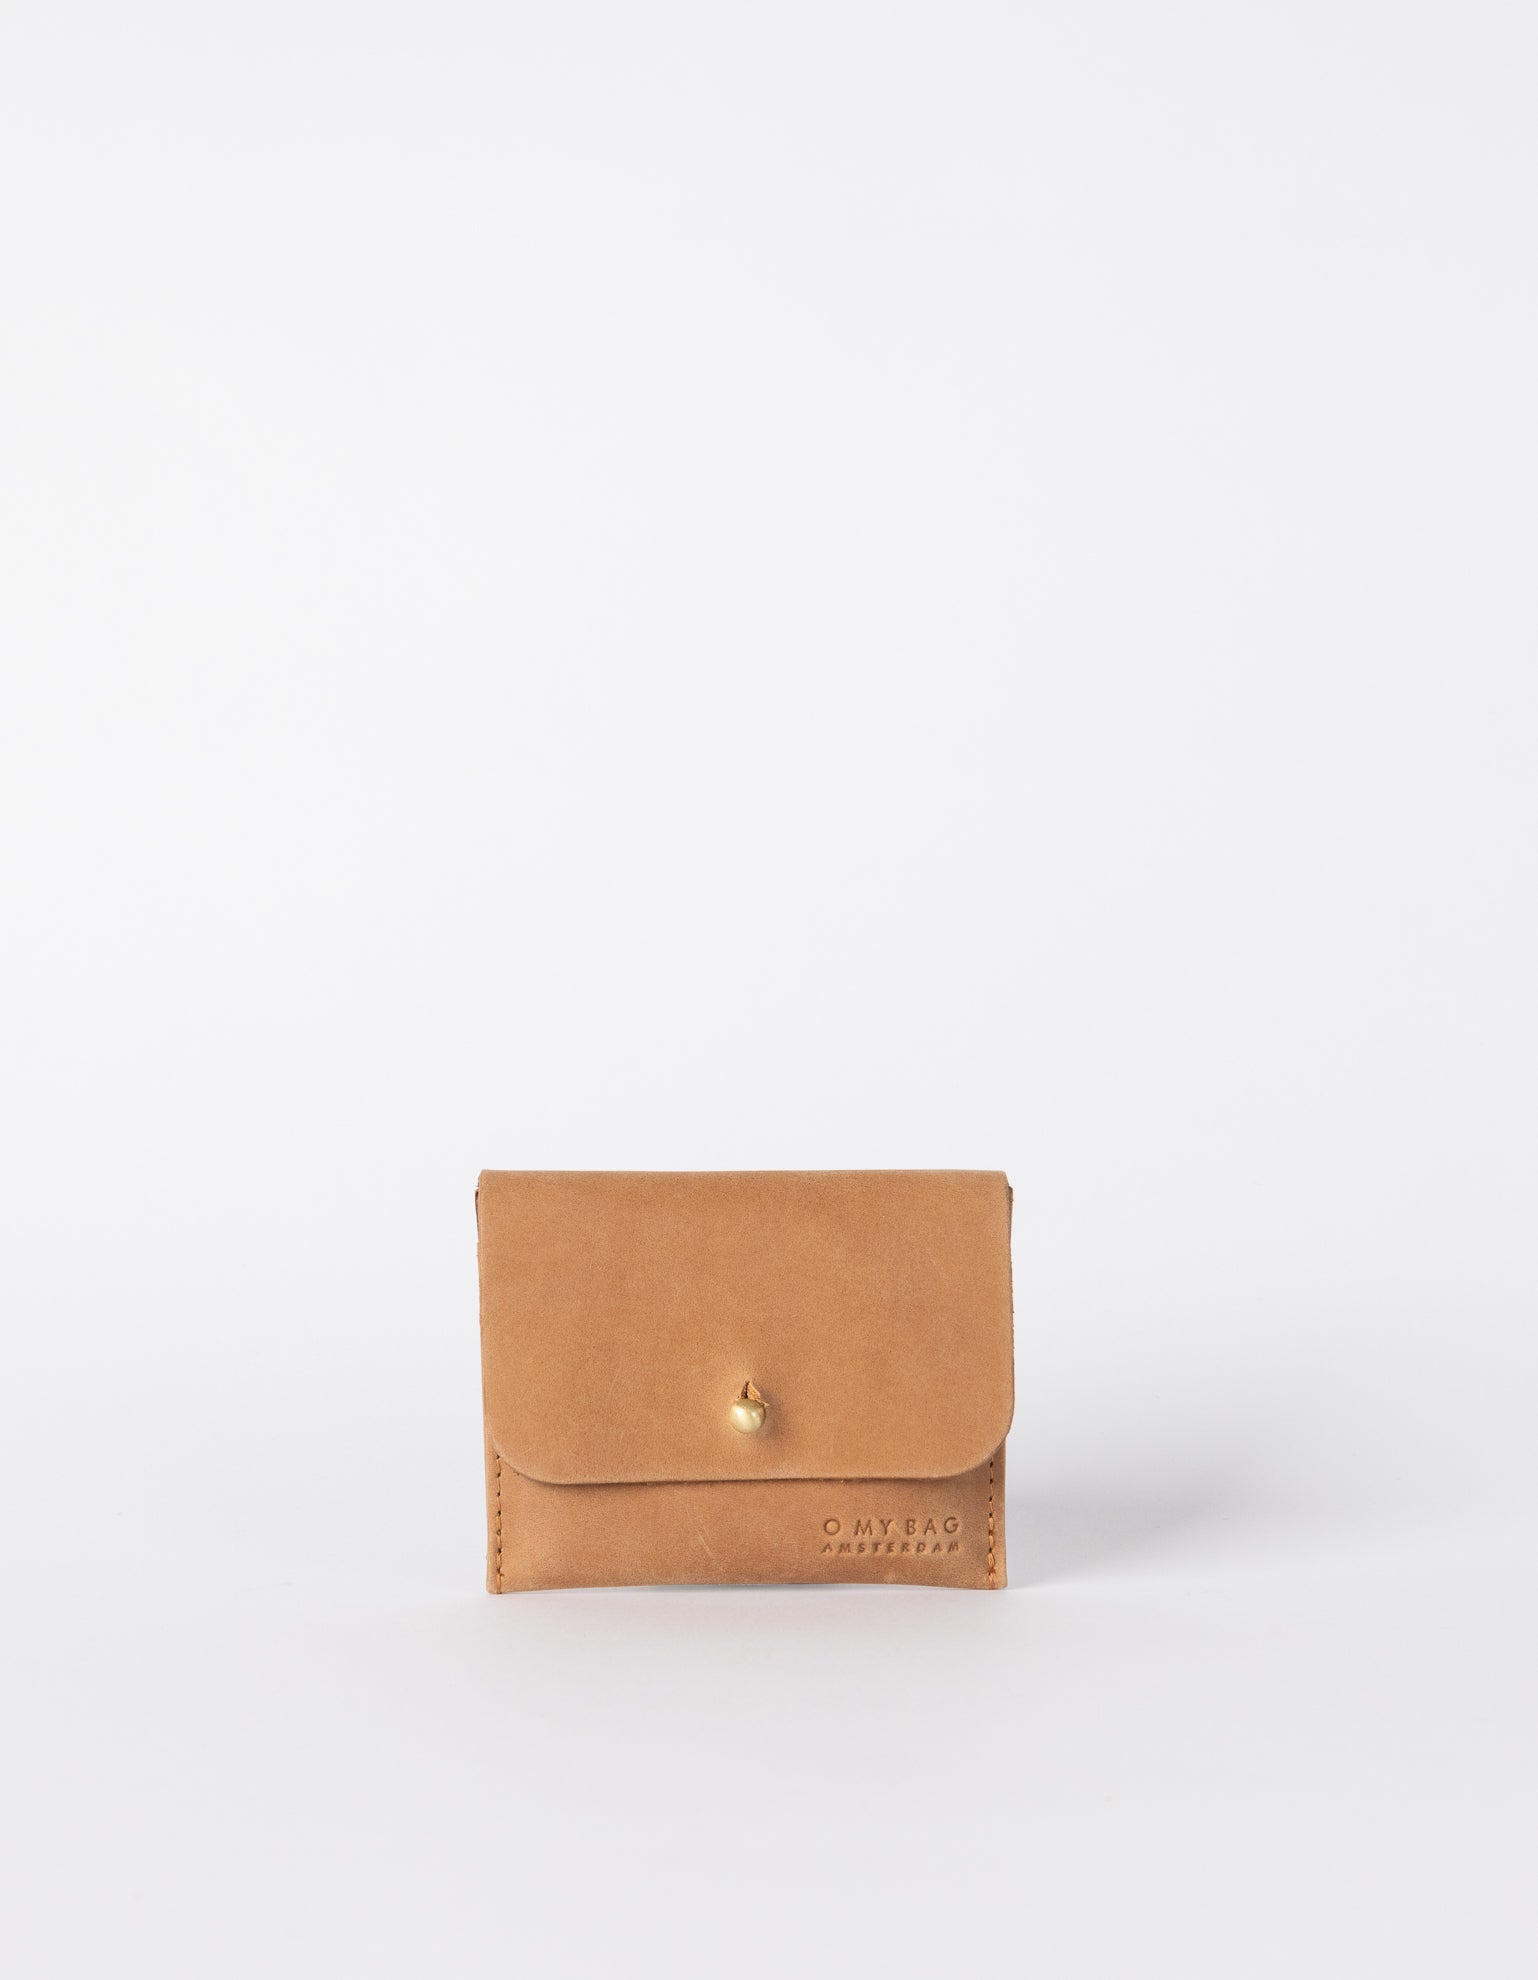 Small Camel cardholder. Square shape. Front image.